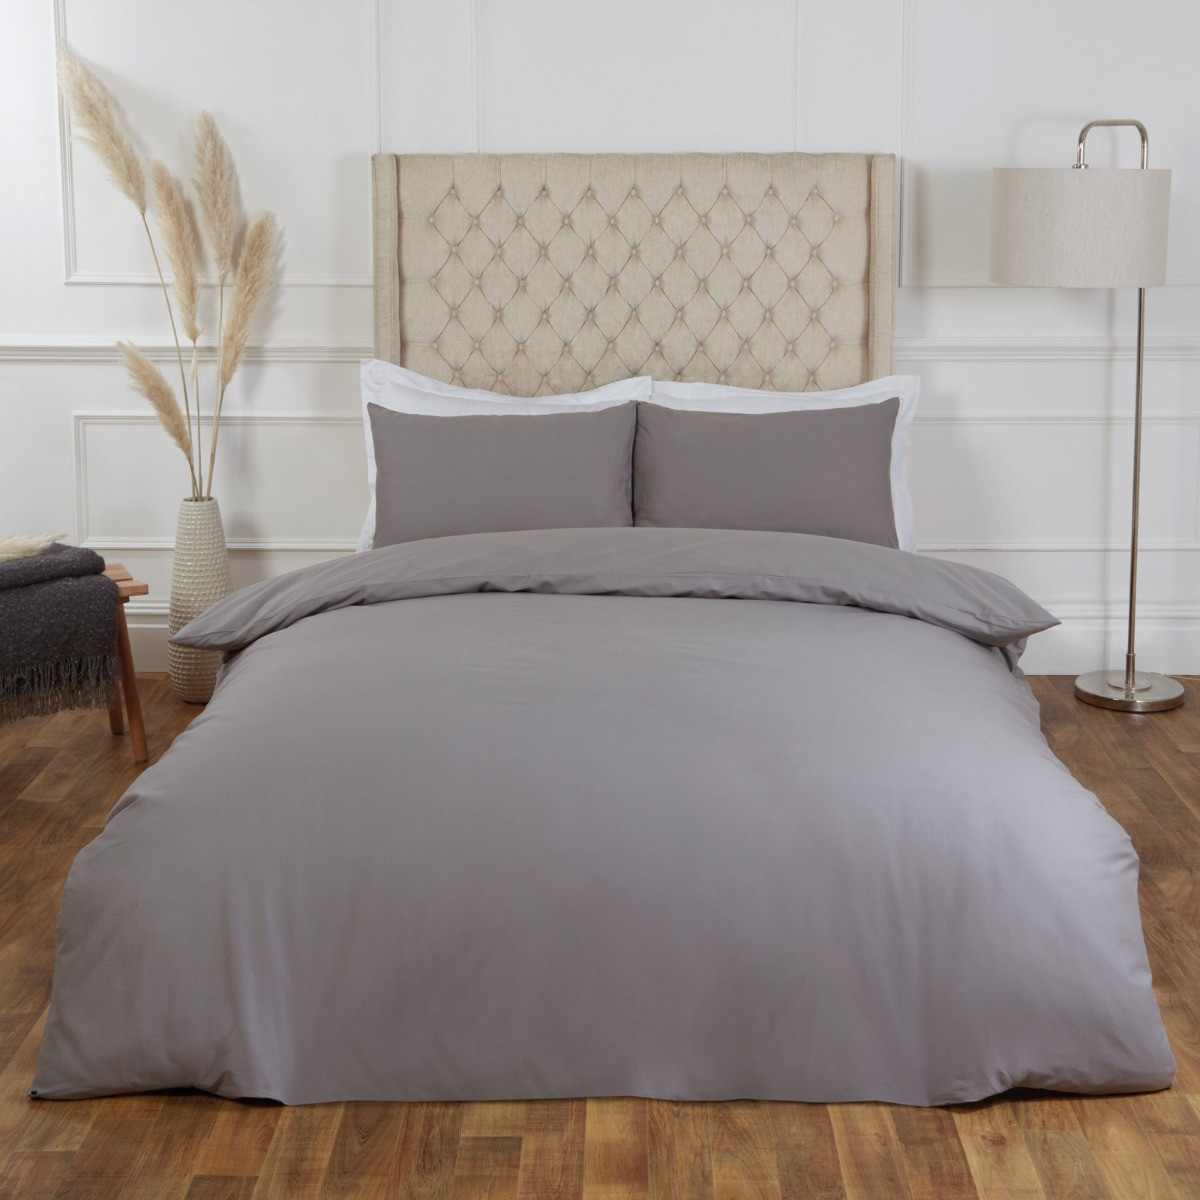 Highams Plain 100% Cotton Duvet Cover with Pillow Case Bedding Set, Grey - King>